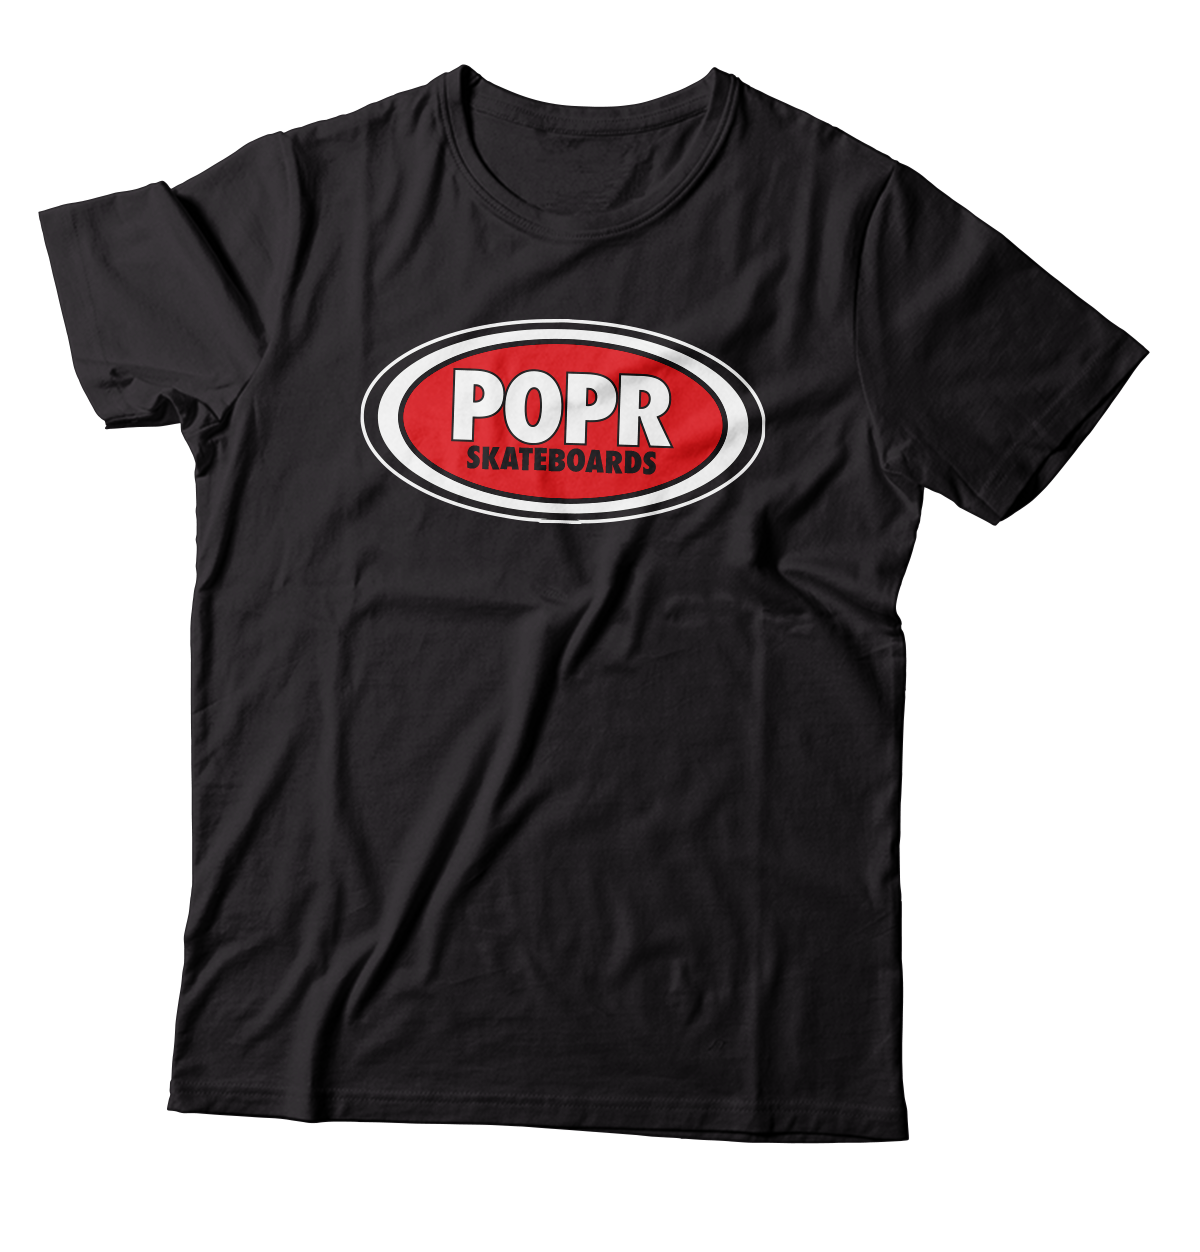 POPR Records - "Real Skateboards" (Black) (T-Shirt)